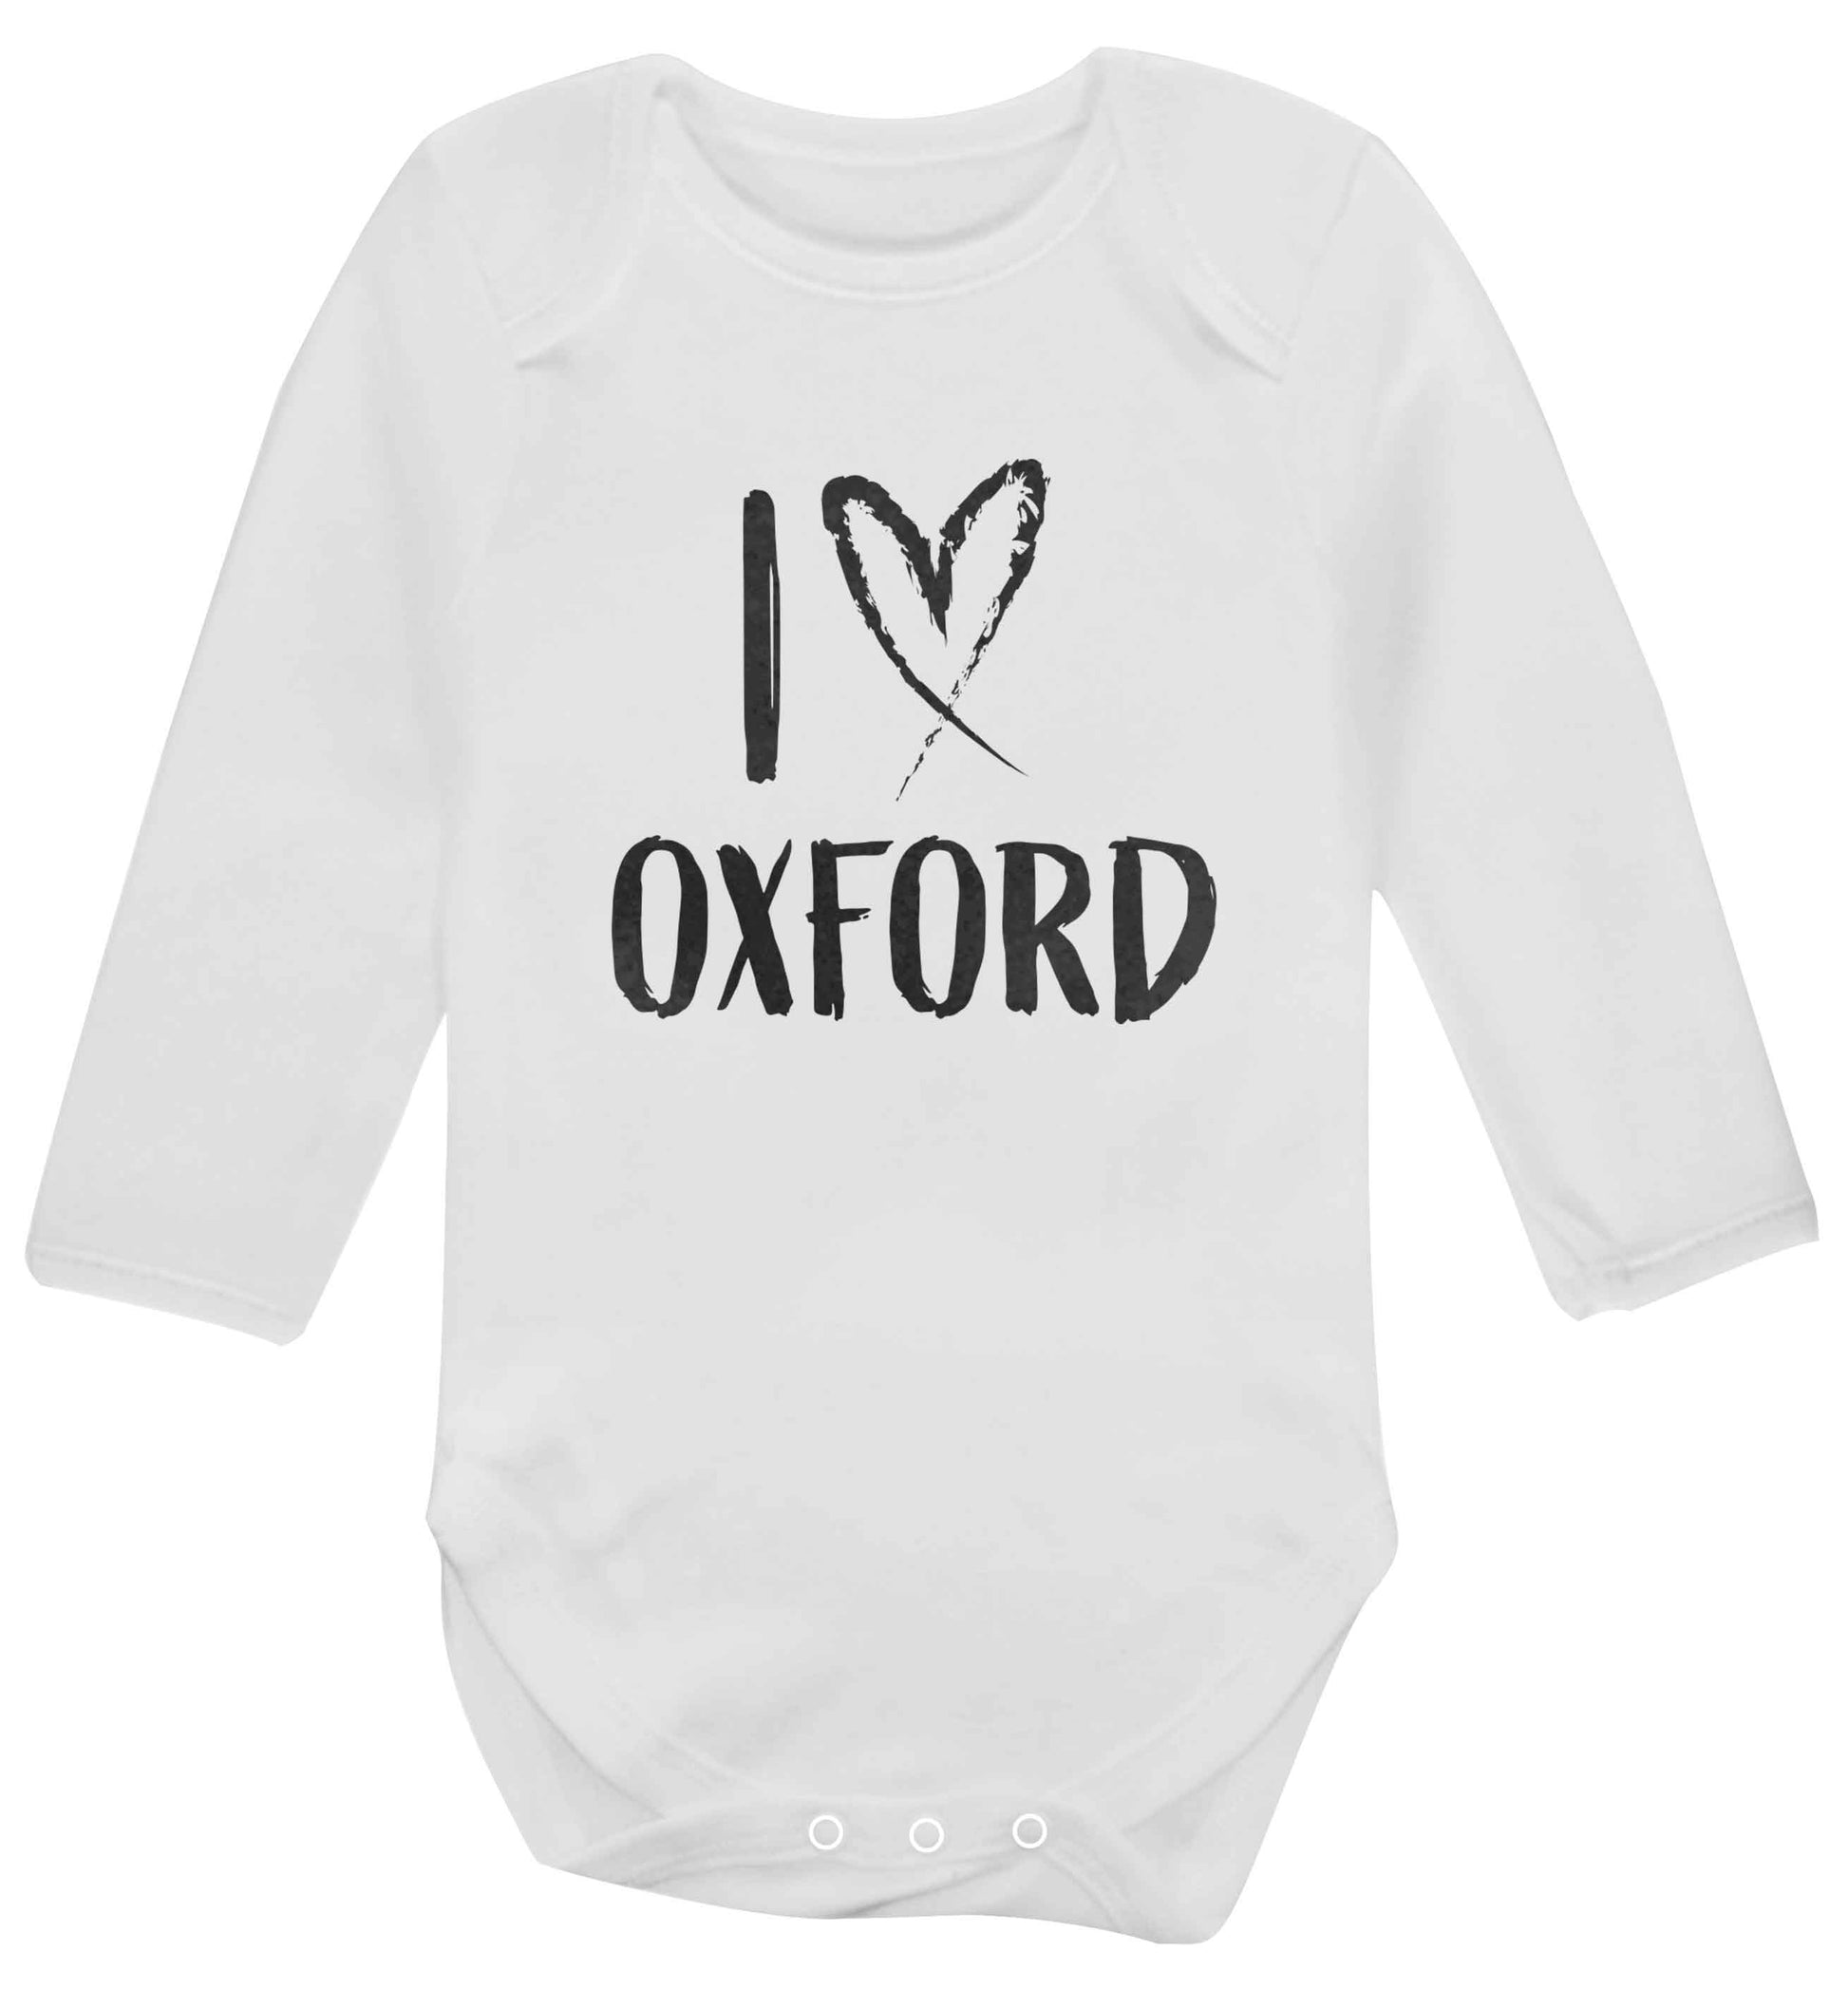 I love Oxford baby vest long sleeved white 6-12 months